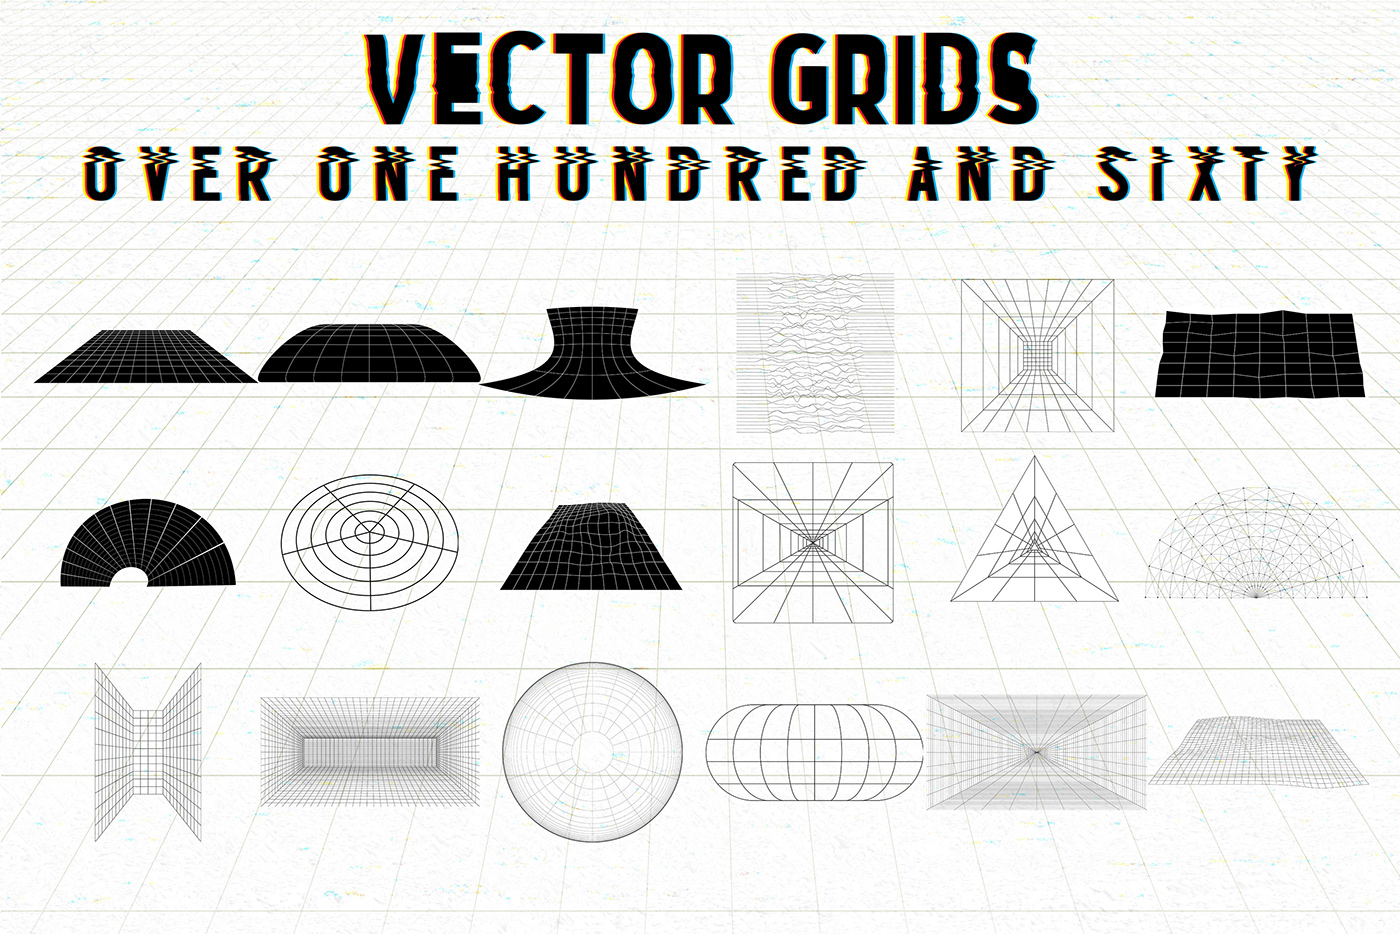 80s electro FUTURISM geometric Glitch grid neon Retro retrowave vaporwave